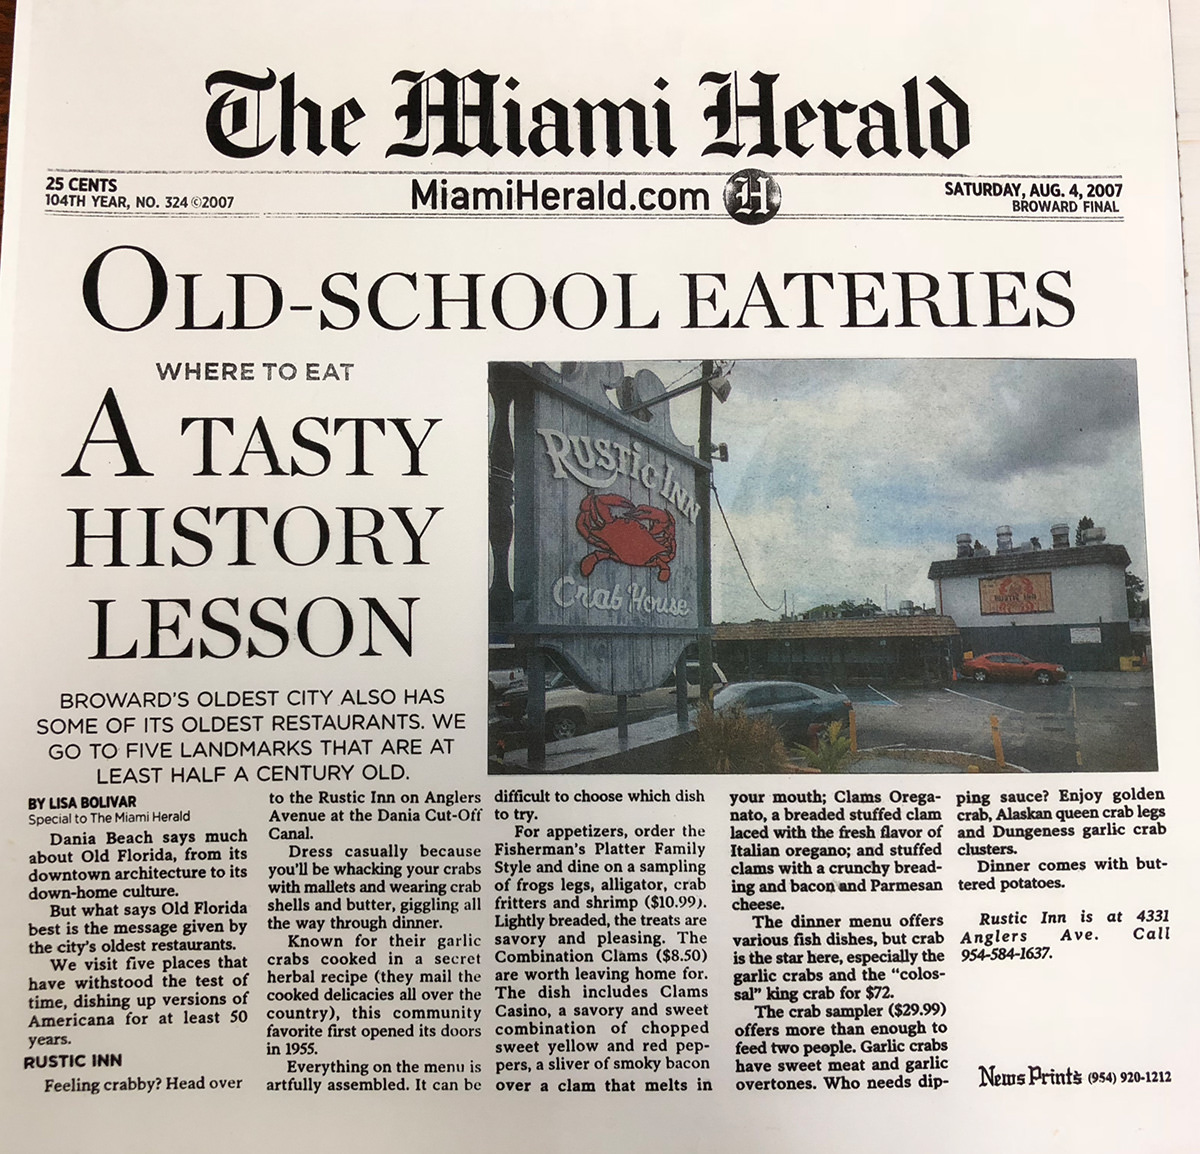 The Miami Herald - Old-School Eateries